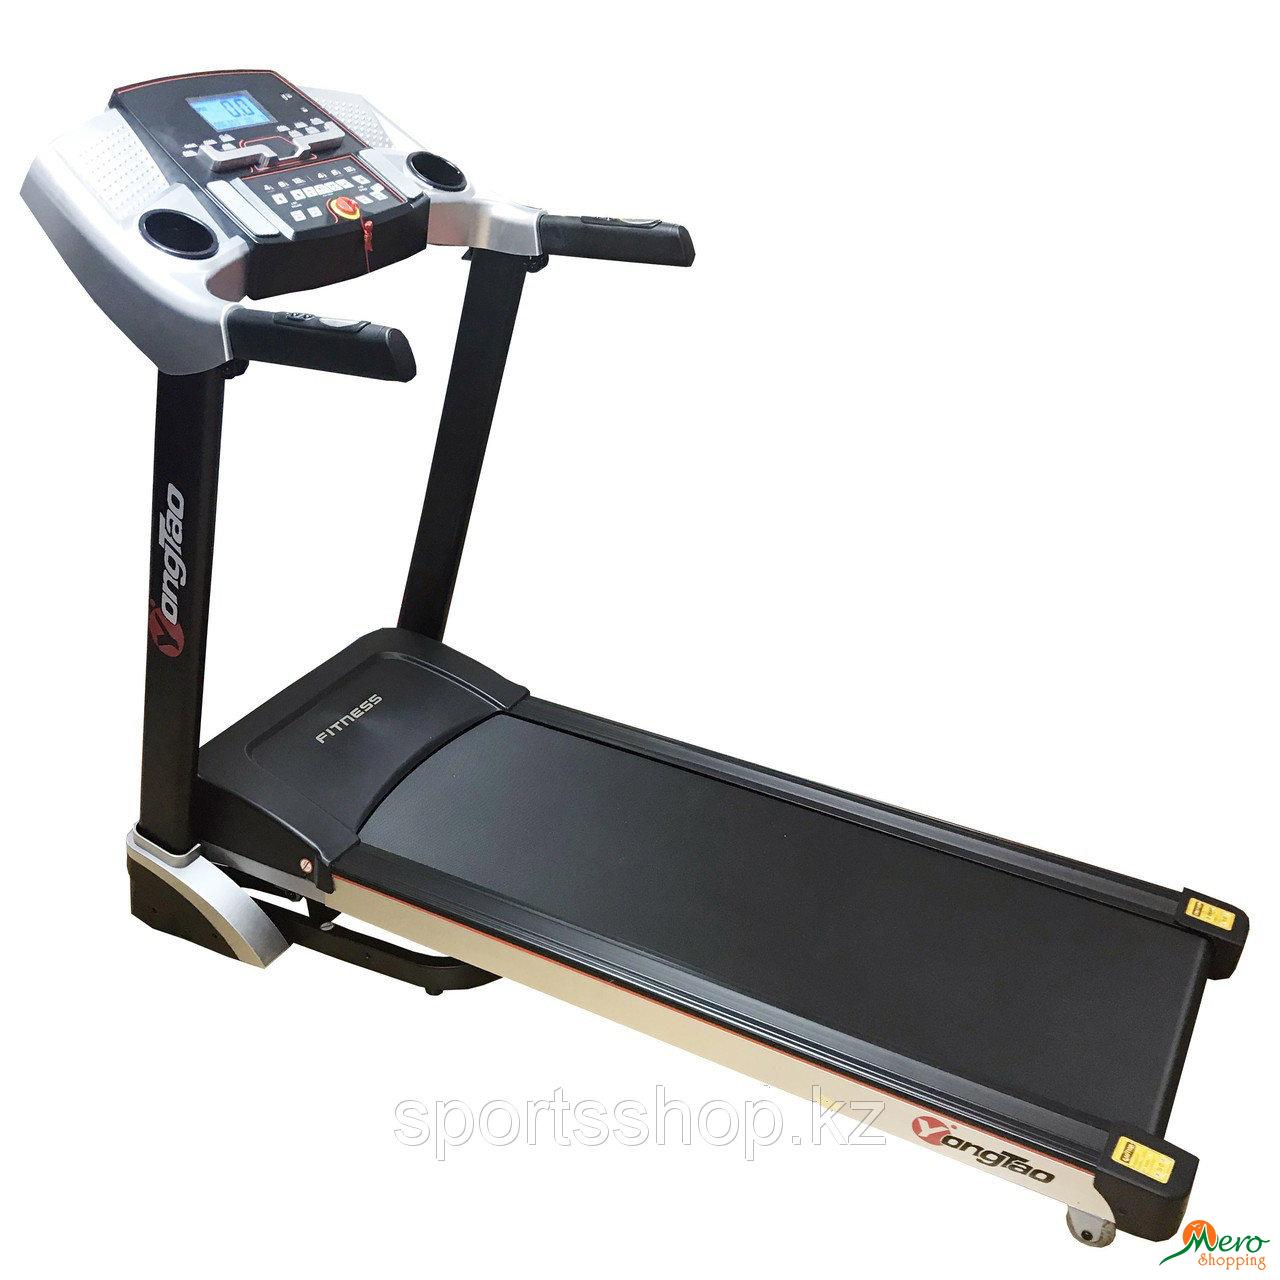 Fitness yongtao Treadmill 